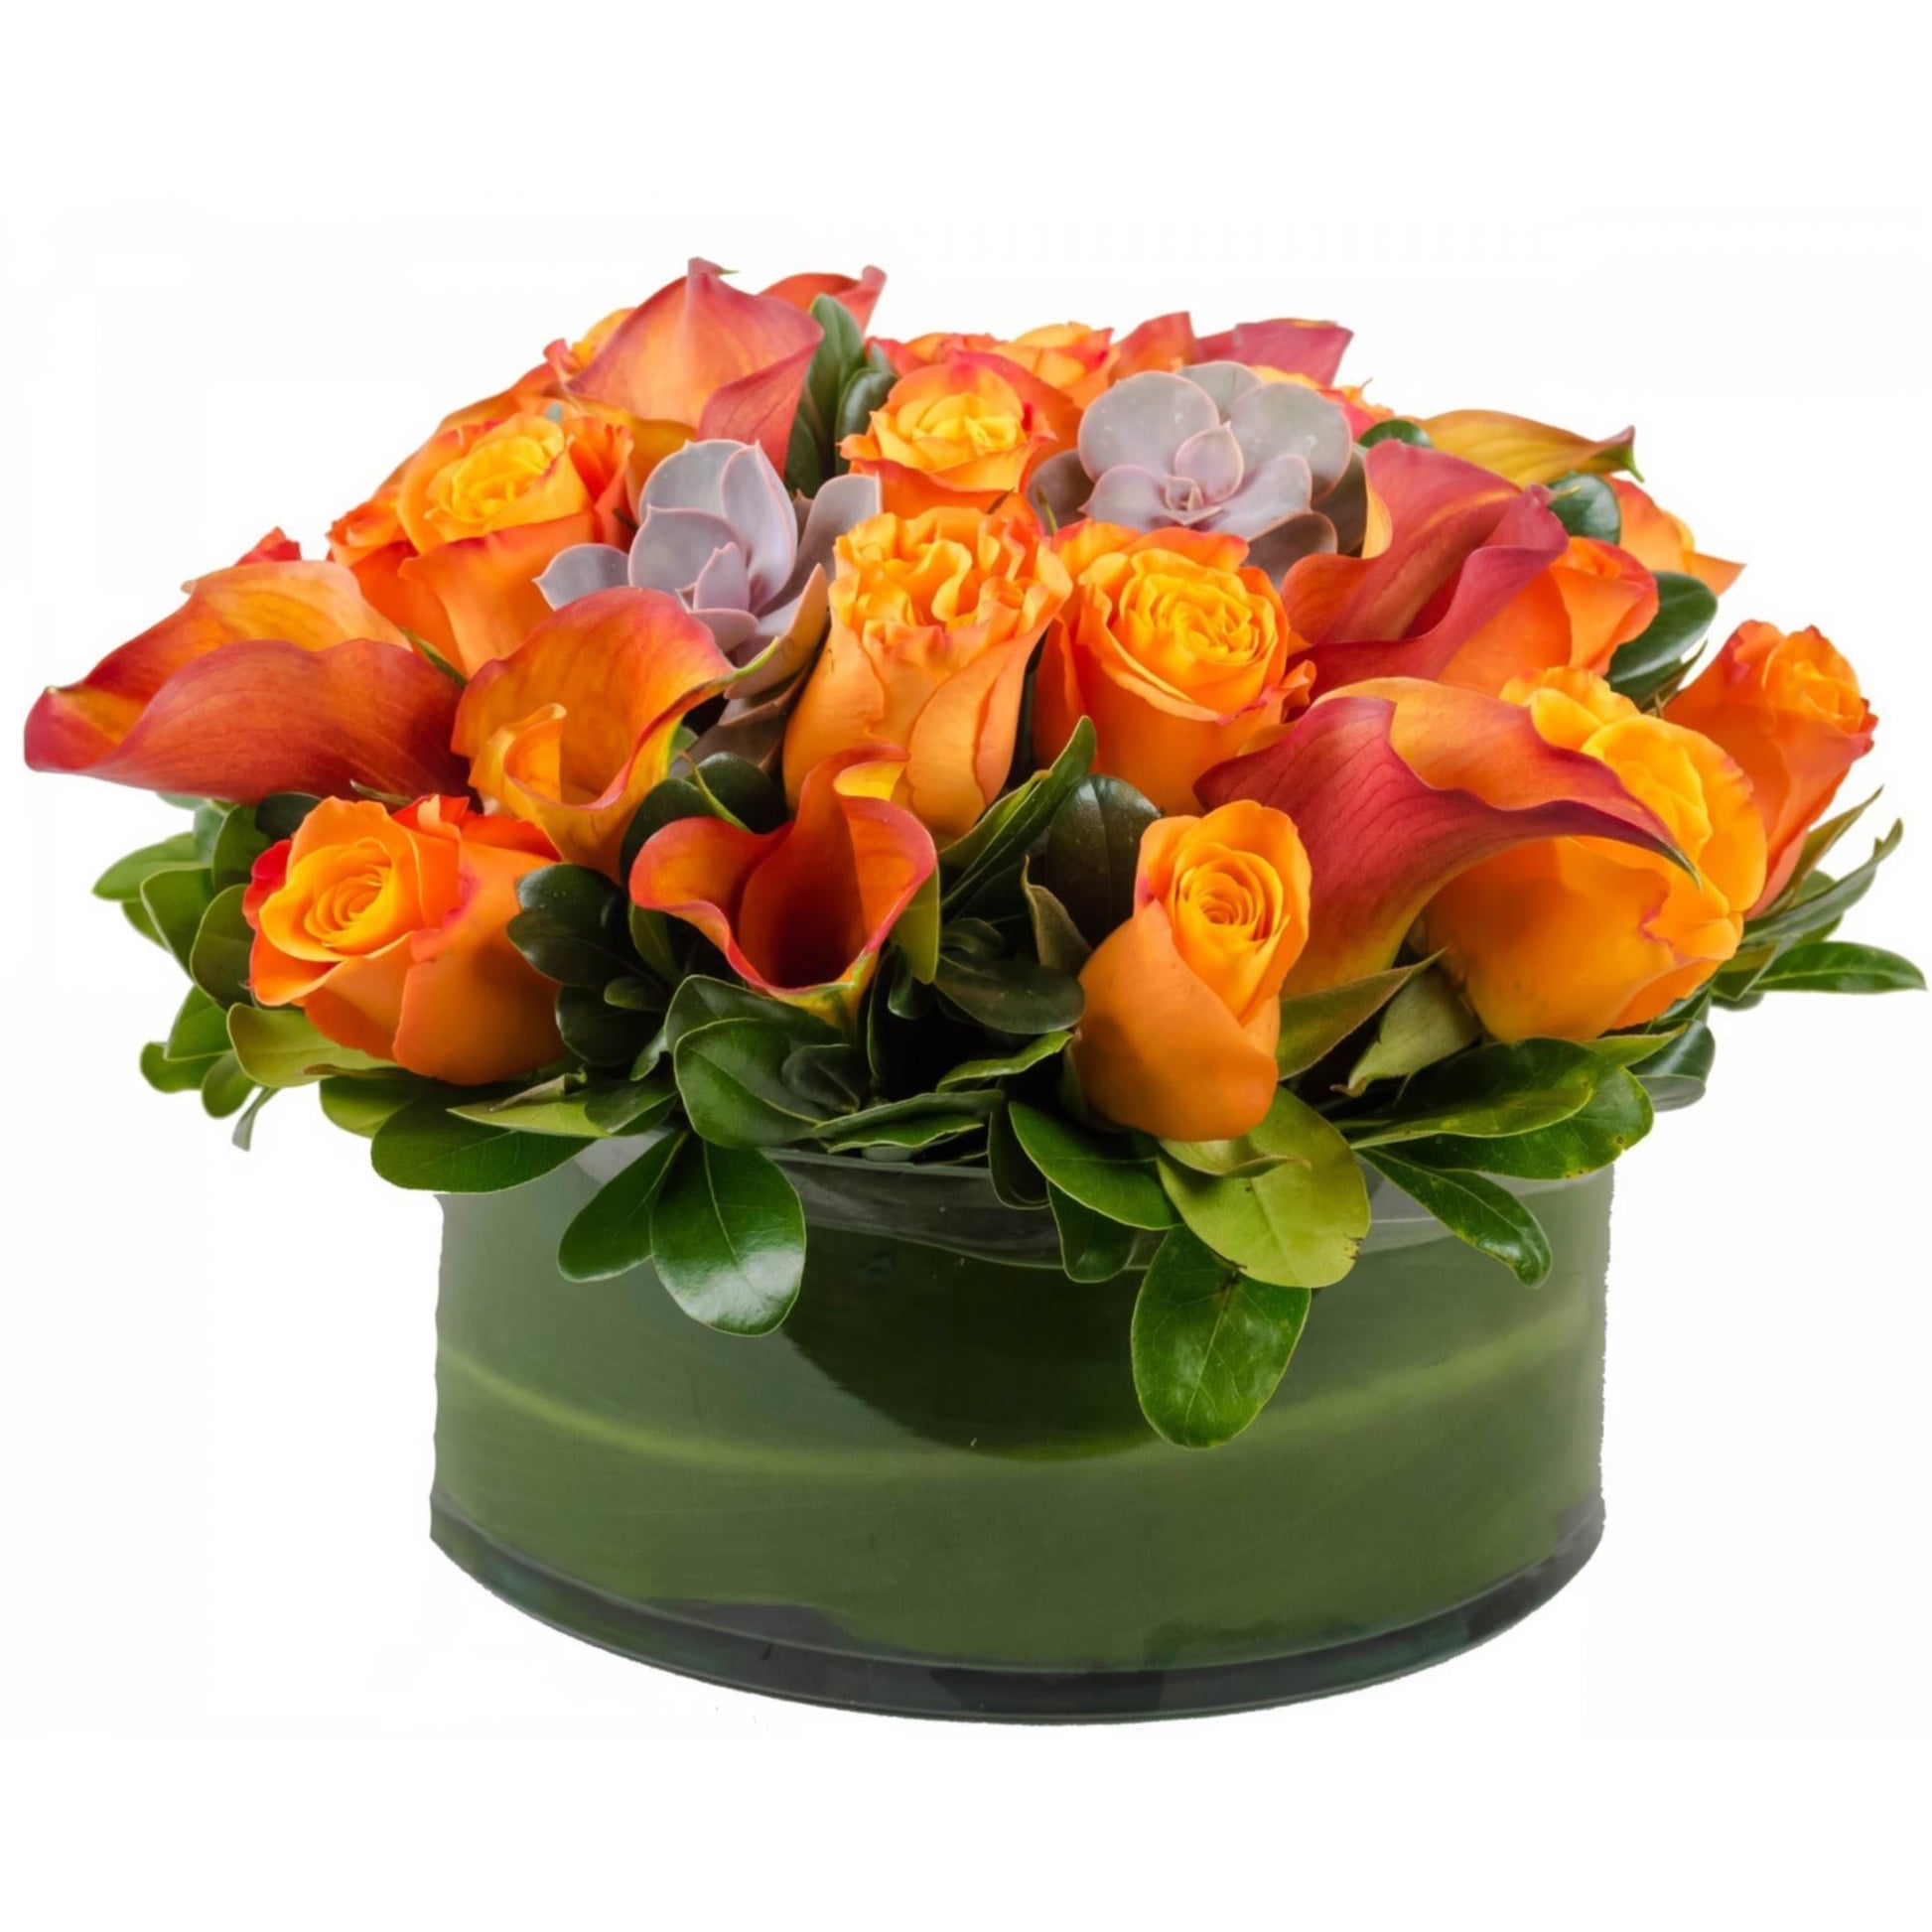 Orange You Amazing - Floral_Arrangement - Flower Delivery NYC